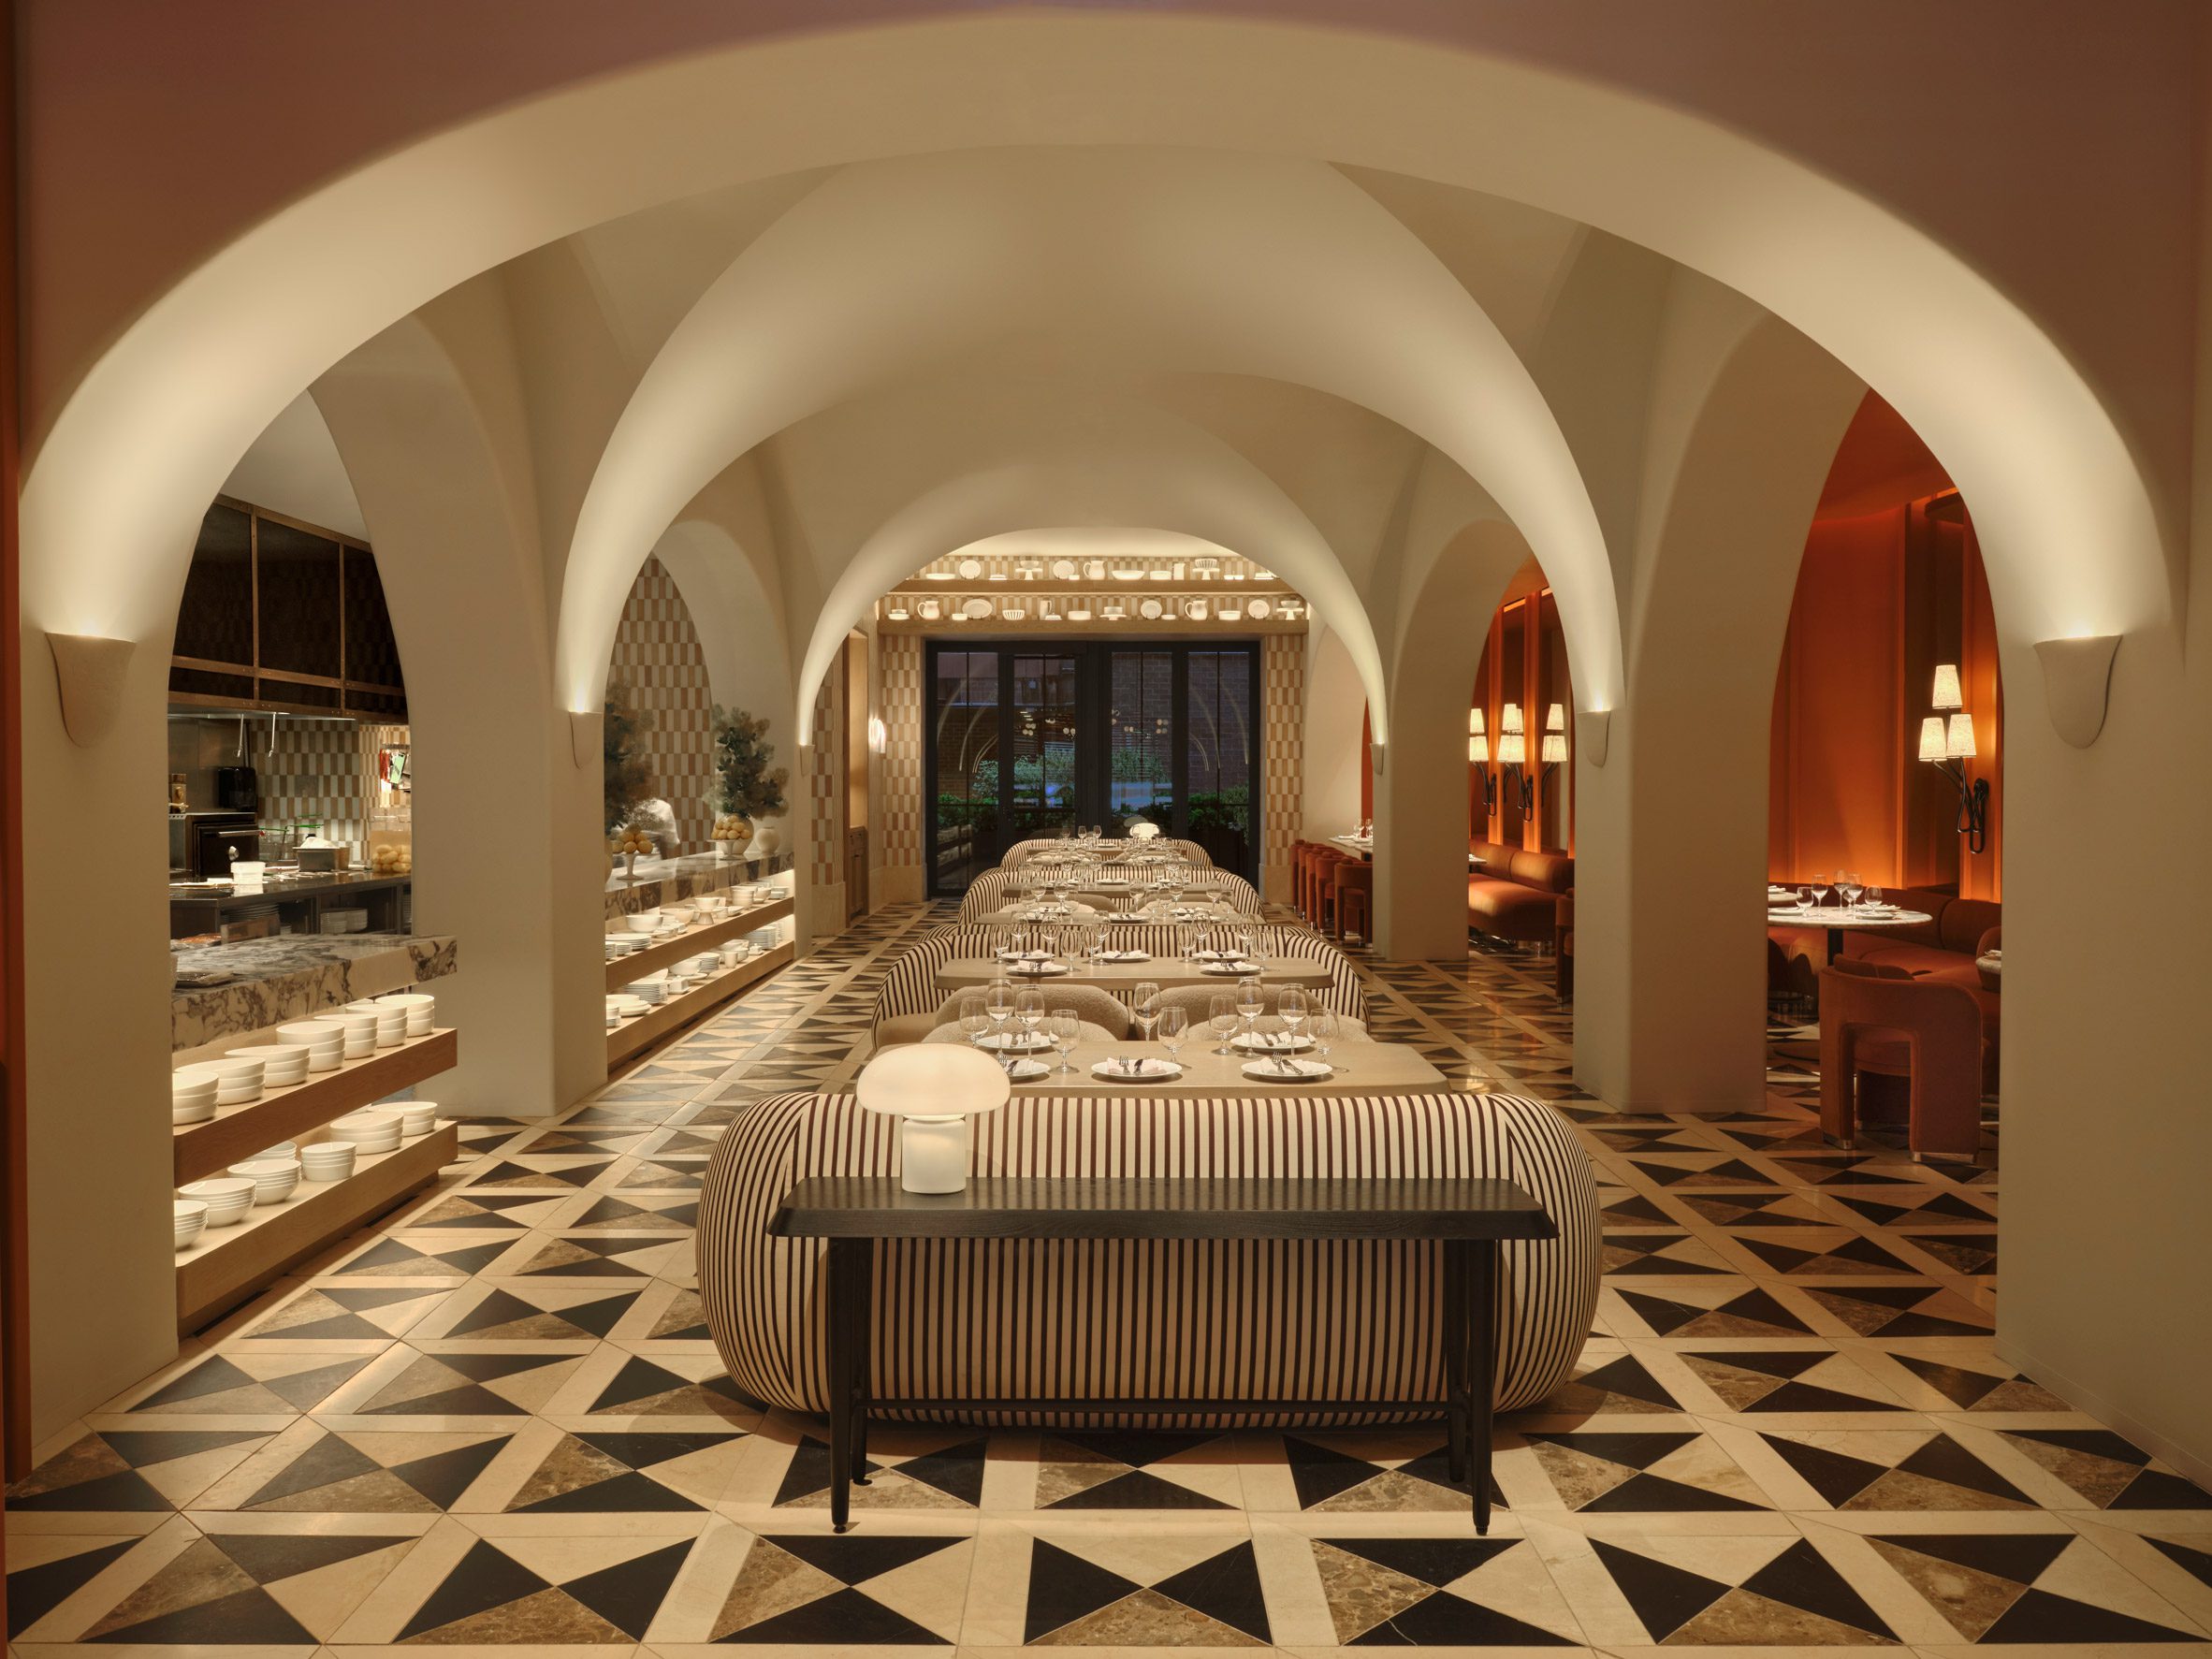 Studio Paolo Ferrari将多伦多餐厅设计成“自己的世界”|ART-Arrakis | 建筑室内设计的创新与灵感